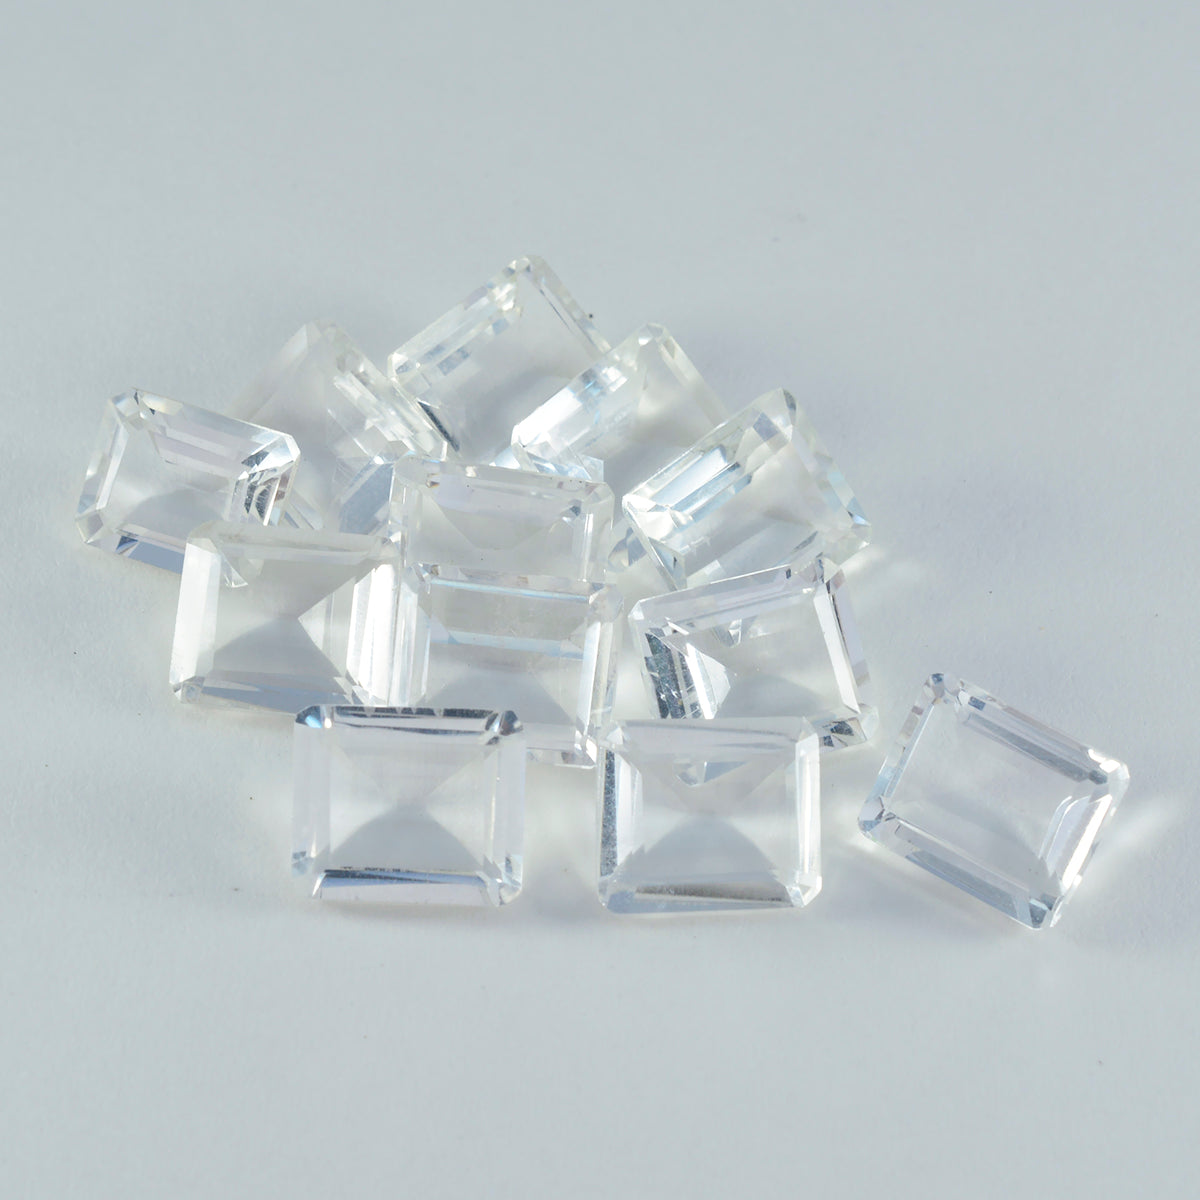 Riyogems 1PC wit kristalkwarts gefacetteerd 5x7 mm achthoekige vorm fantastische kwaliteit losse edelstenen